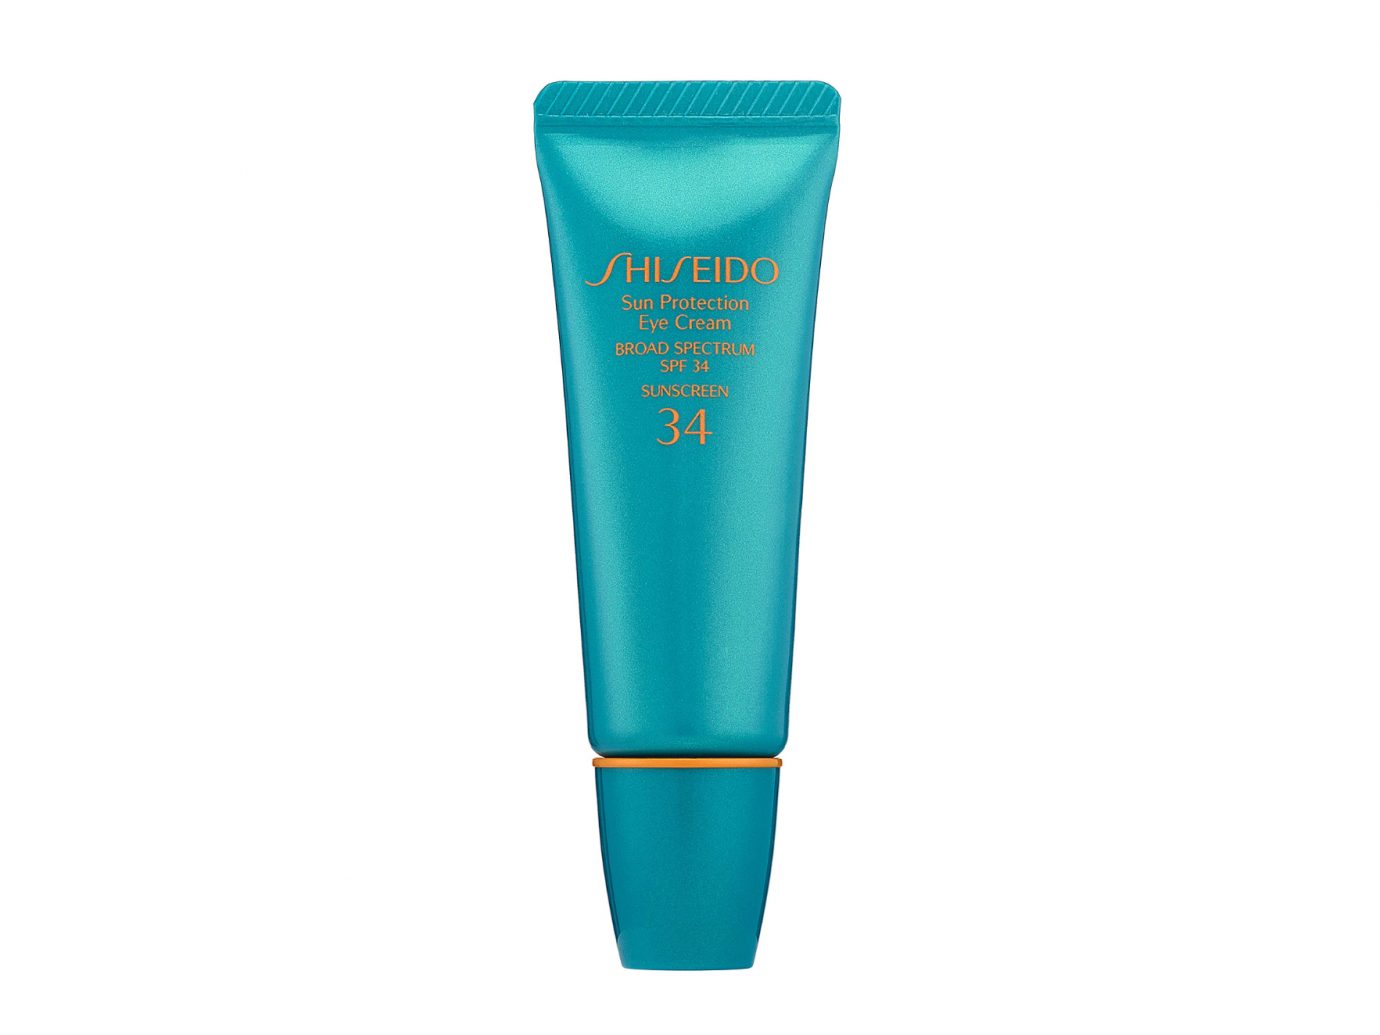 Shiseido Sun Protection Eye Cream Broad Spectrum SPF 34 Sunscreen